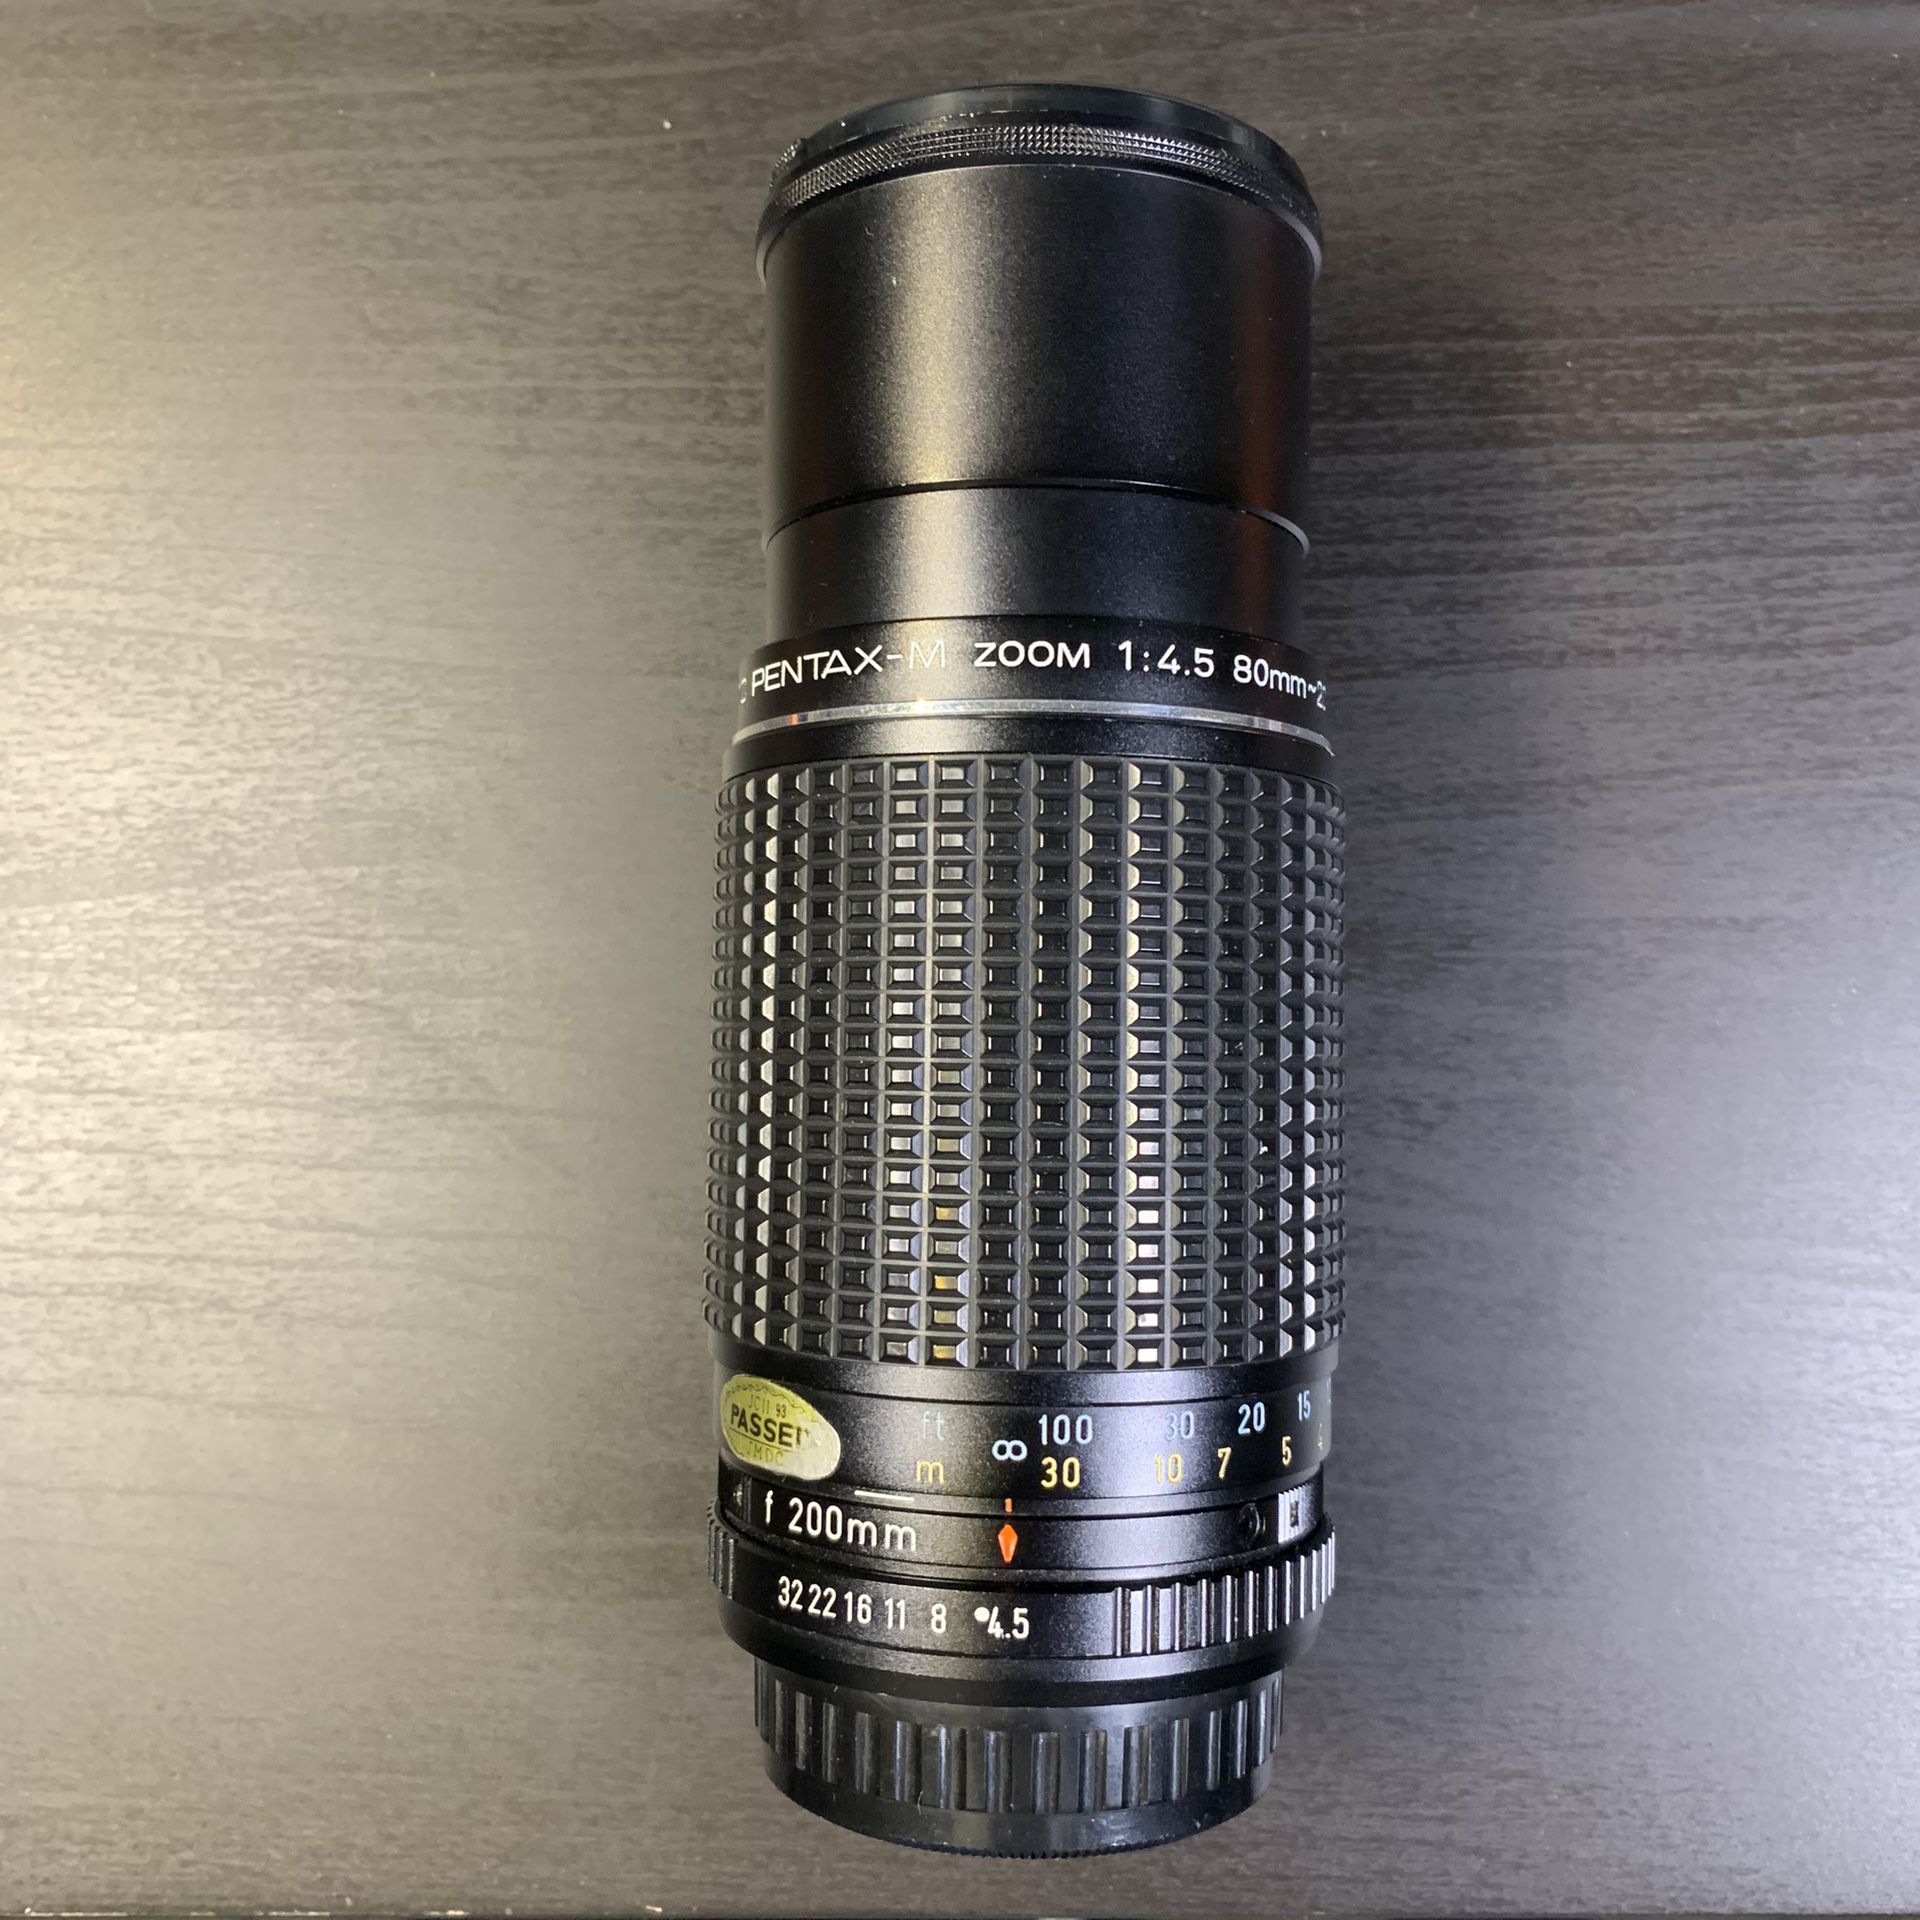 SMC Pentax-M Zoom f/4.5 80-200mm Lens